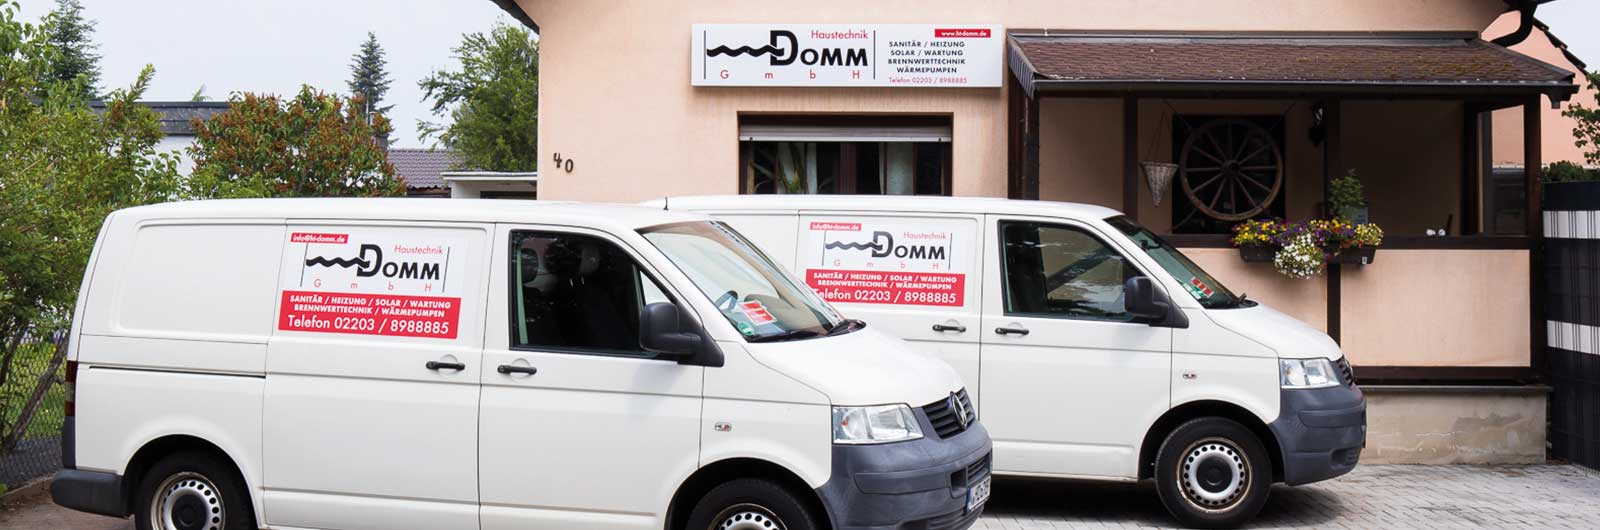 Domm Haustechnik GmbH in Köln Porz